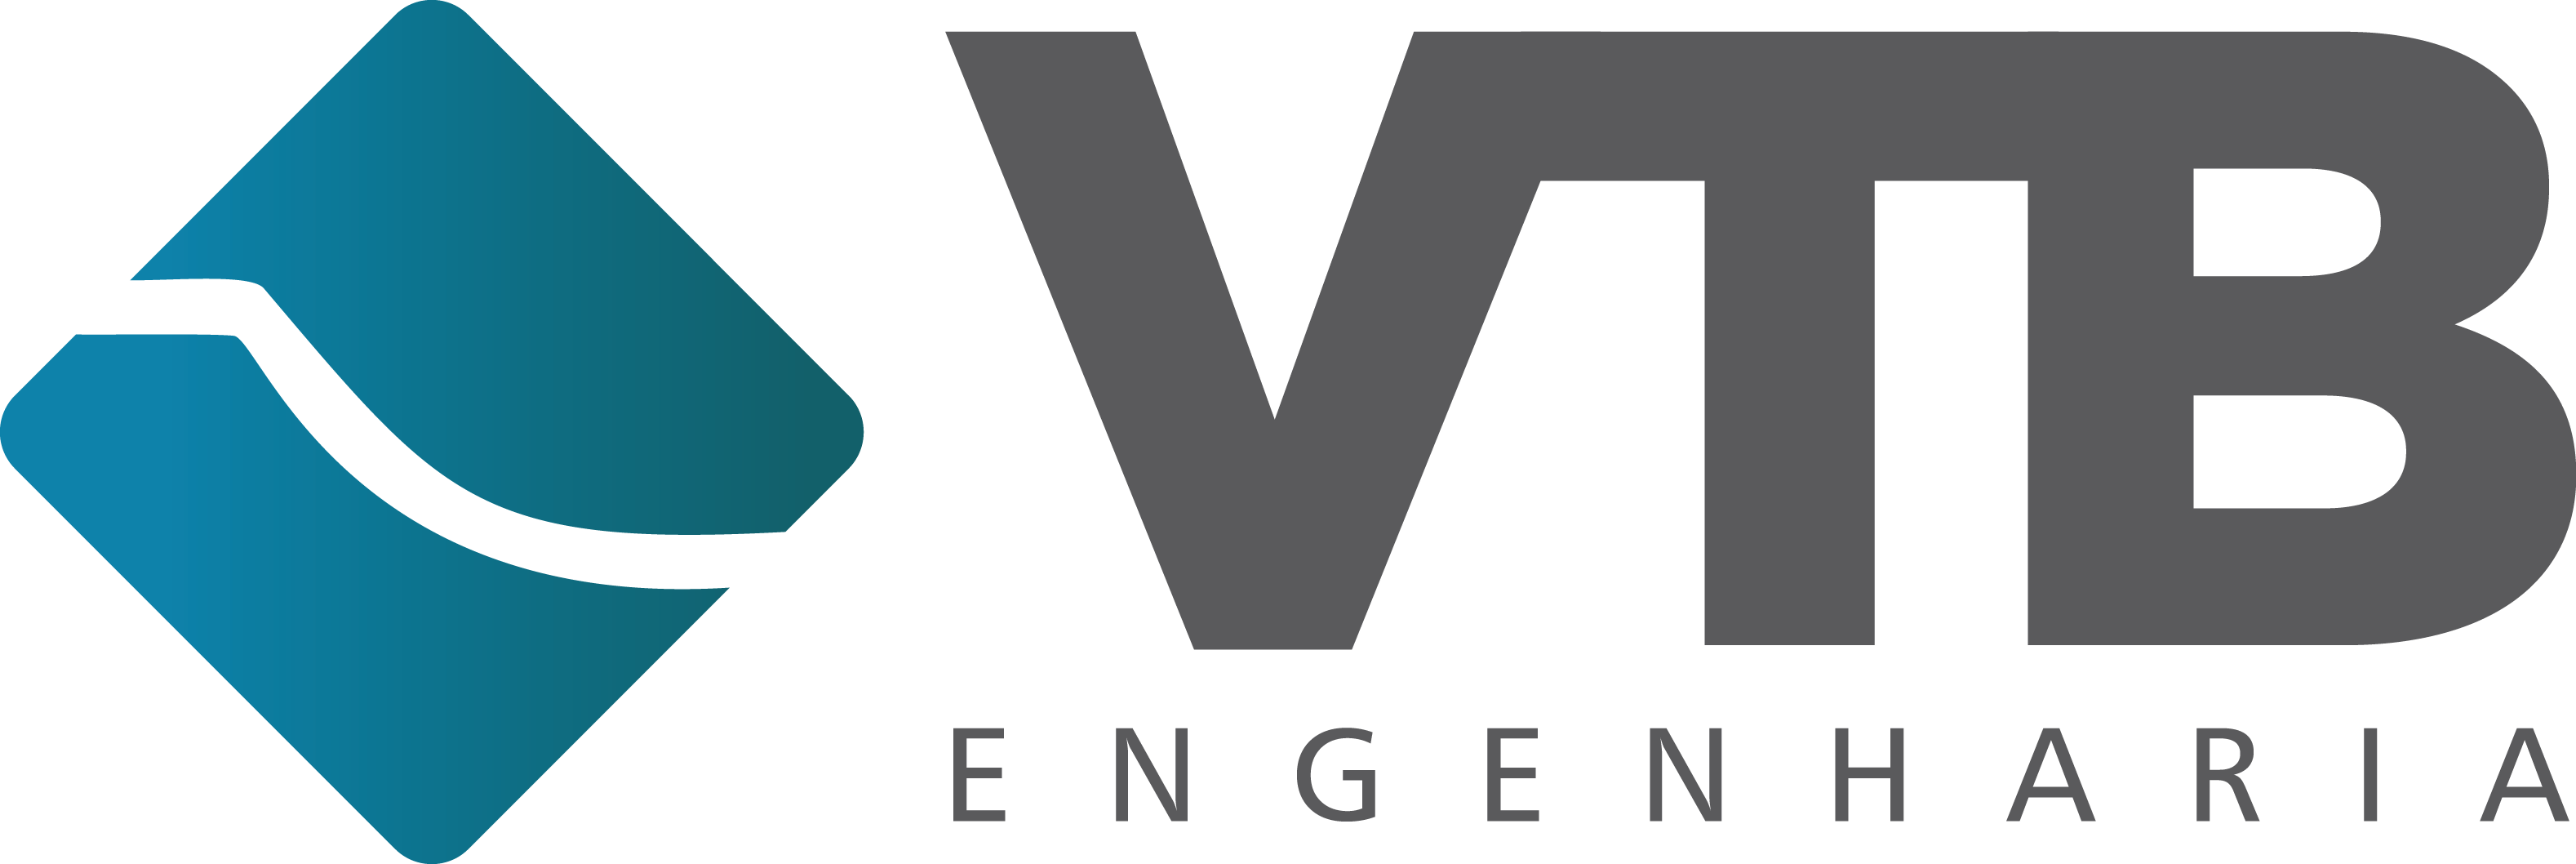 VTB Engenharia